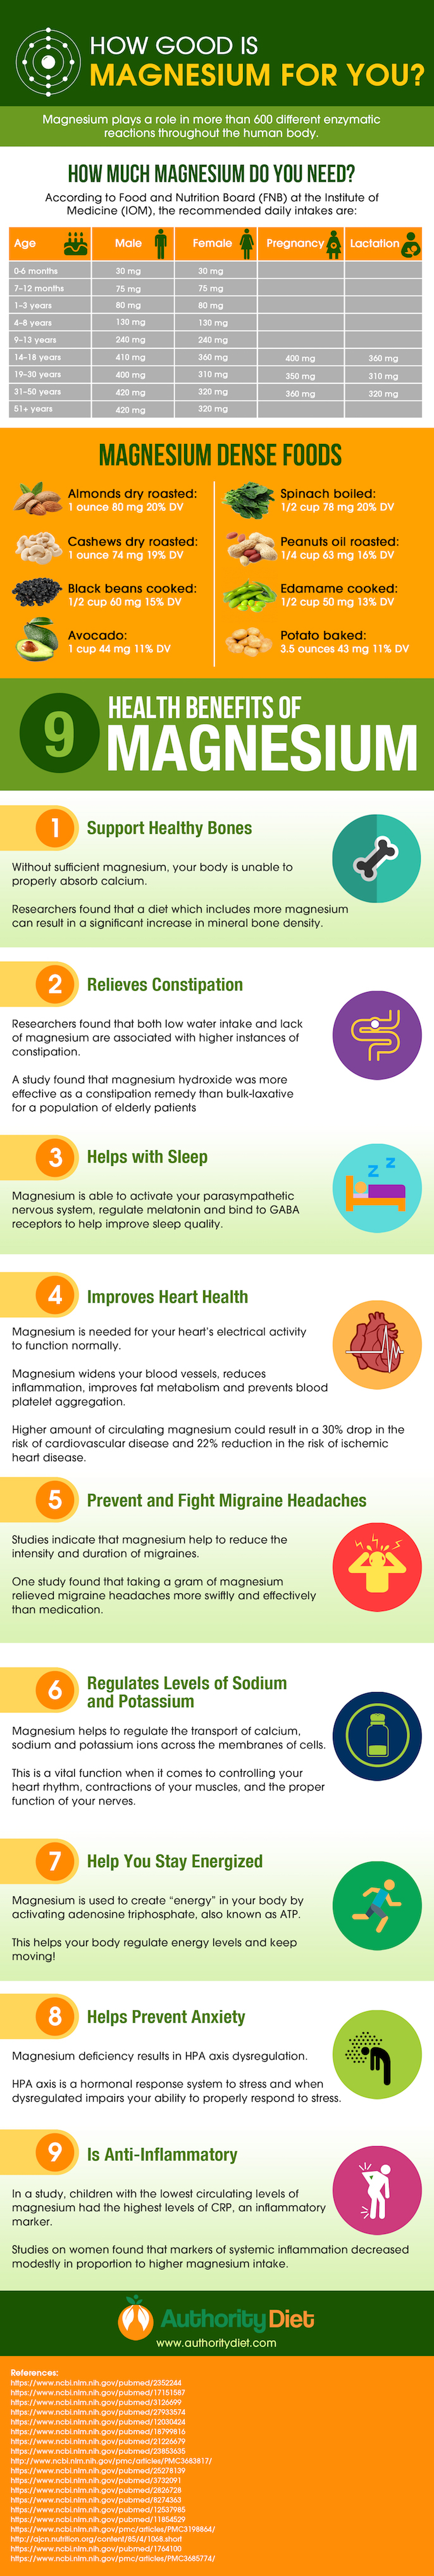 magnesium benefits infographic